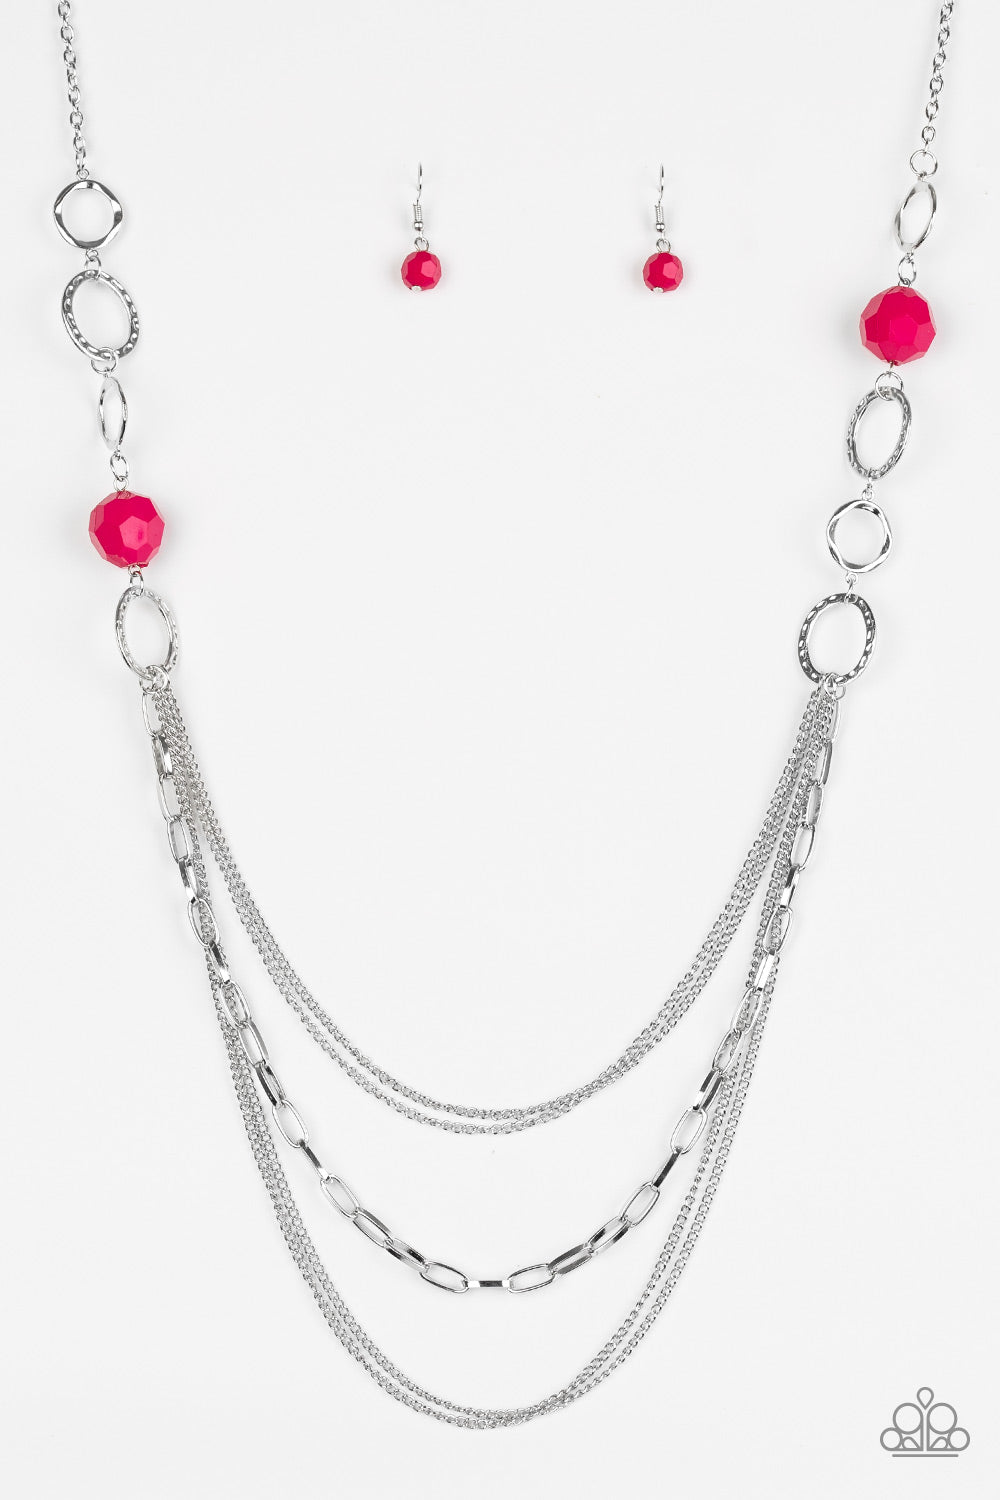 Margarita Masquerades Pink Paparazzi Necklace Cashmere Pink Jewels - Cashmere Pink Jewels & Accessories, Cashmere Pink Jewels & Accessories - Paparazzi